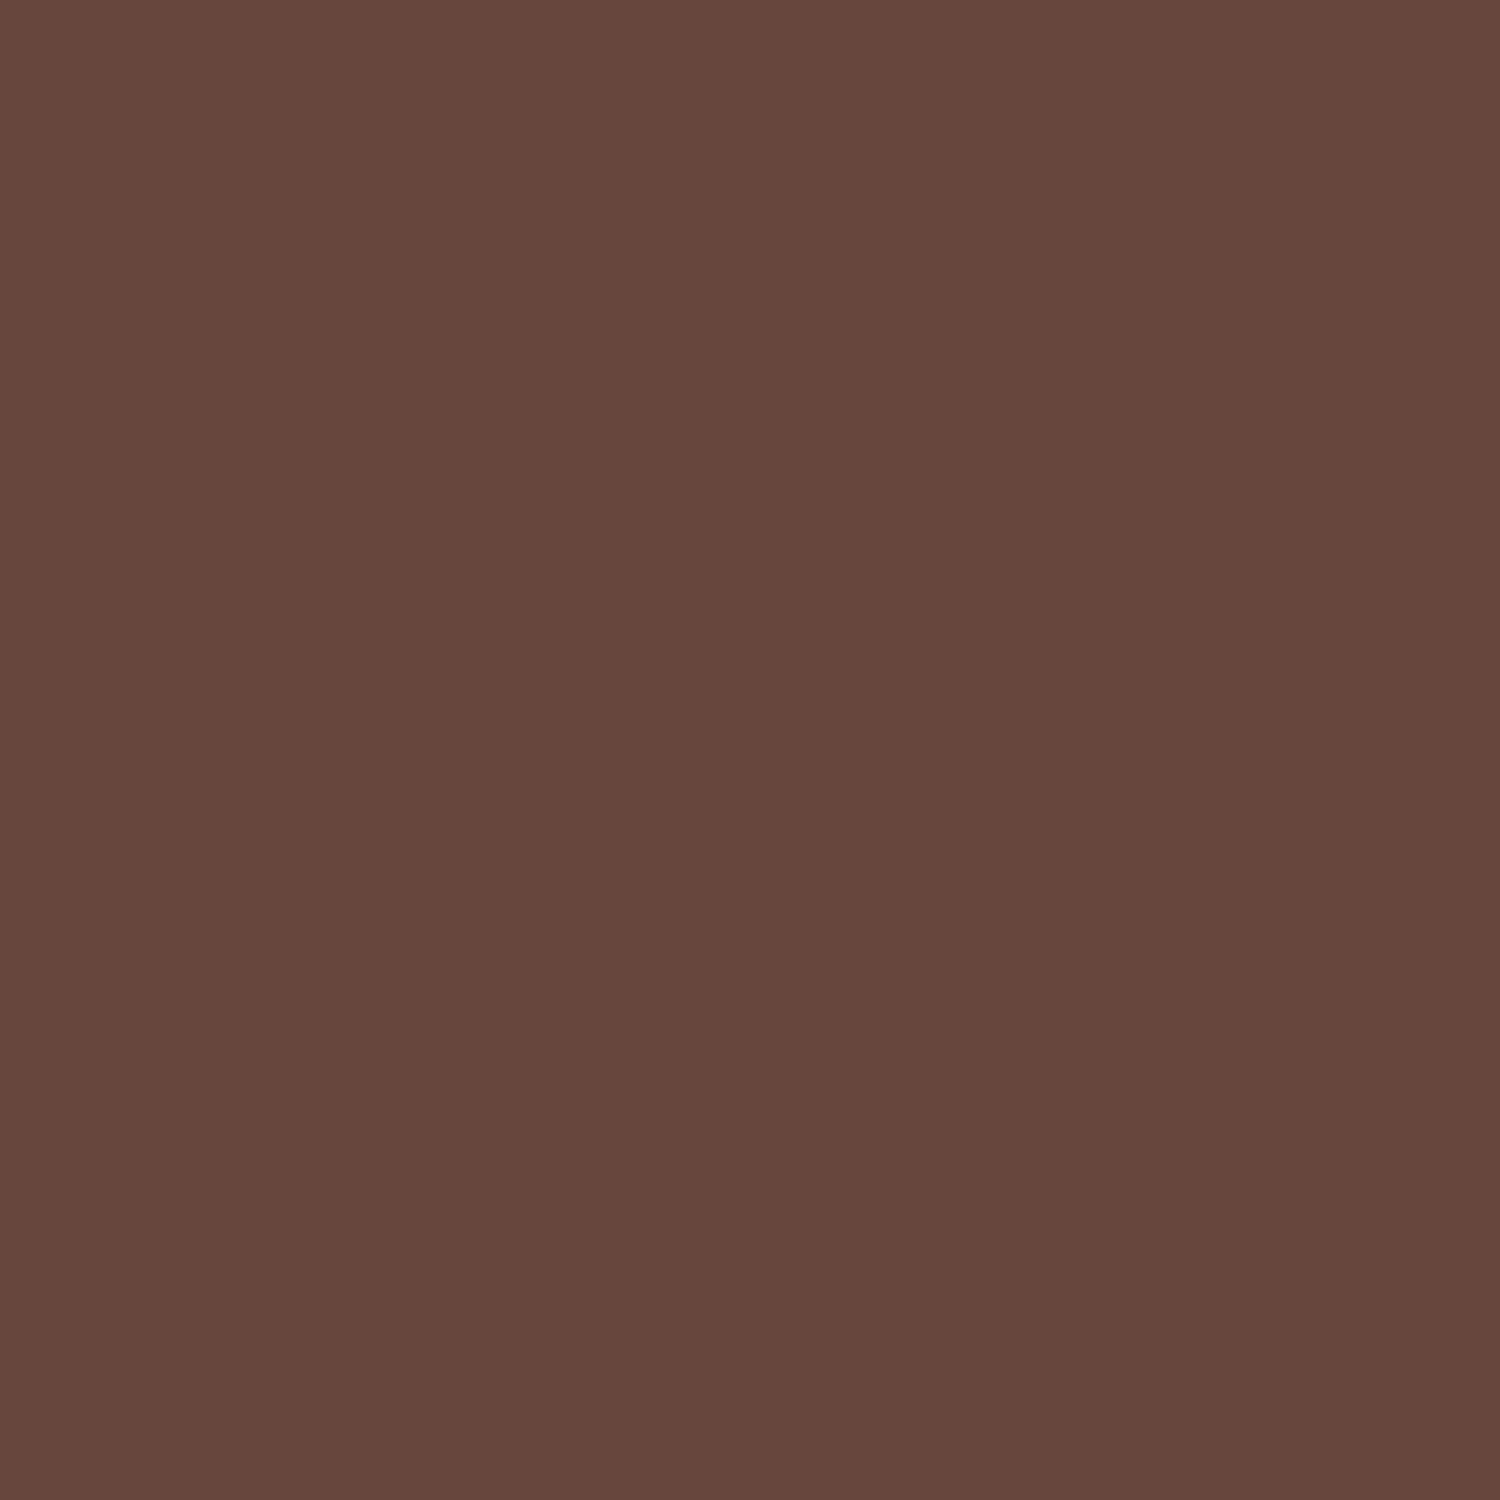 Fiebing's Leather Dye Dark Brown, 32 oz – Binkt